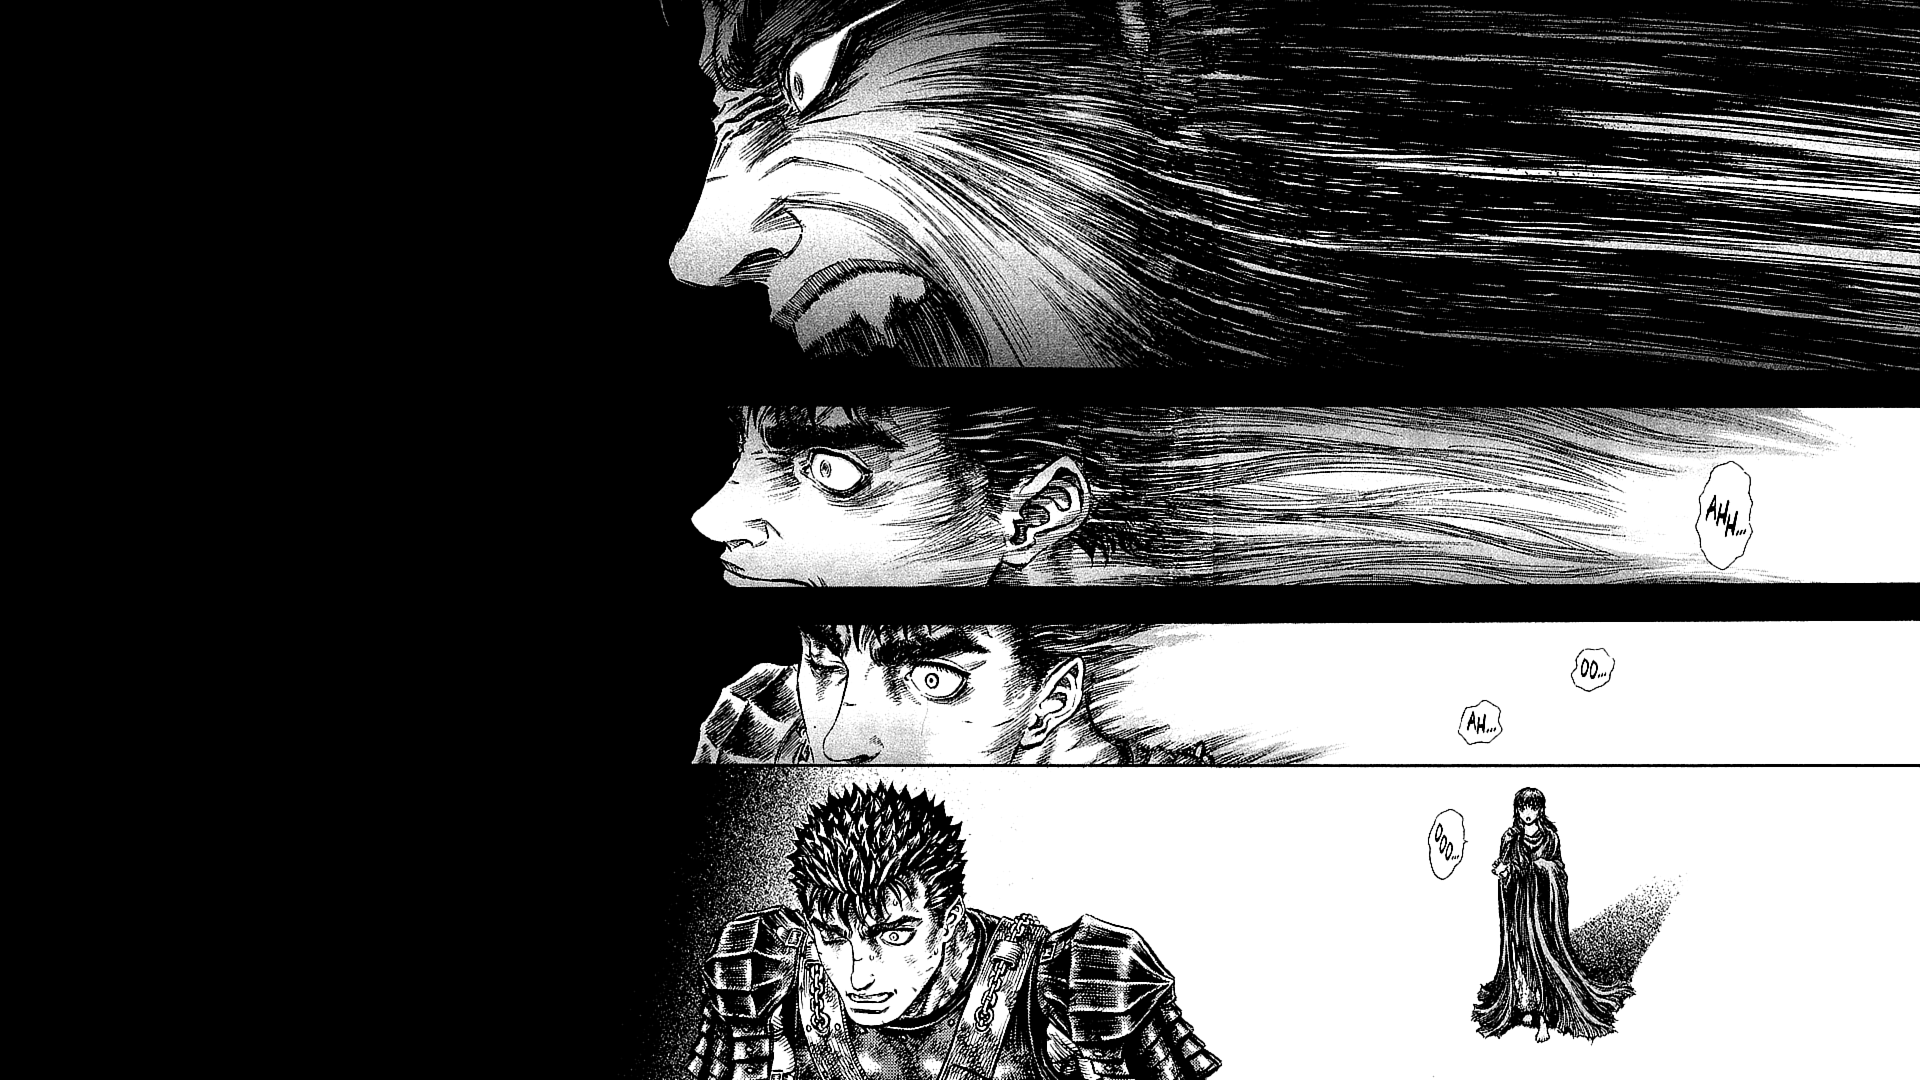 Manga Panels Wallpapers - Wallpaper Cave